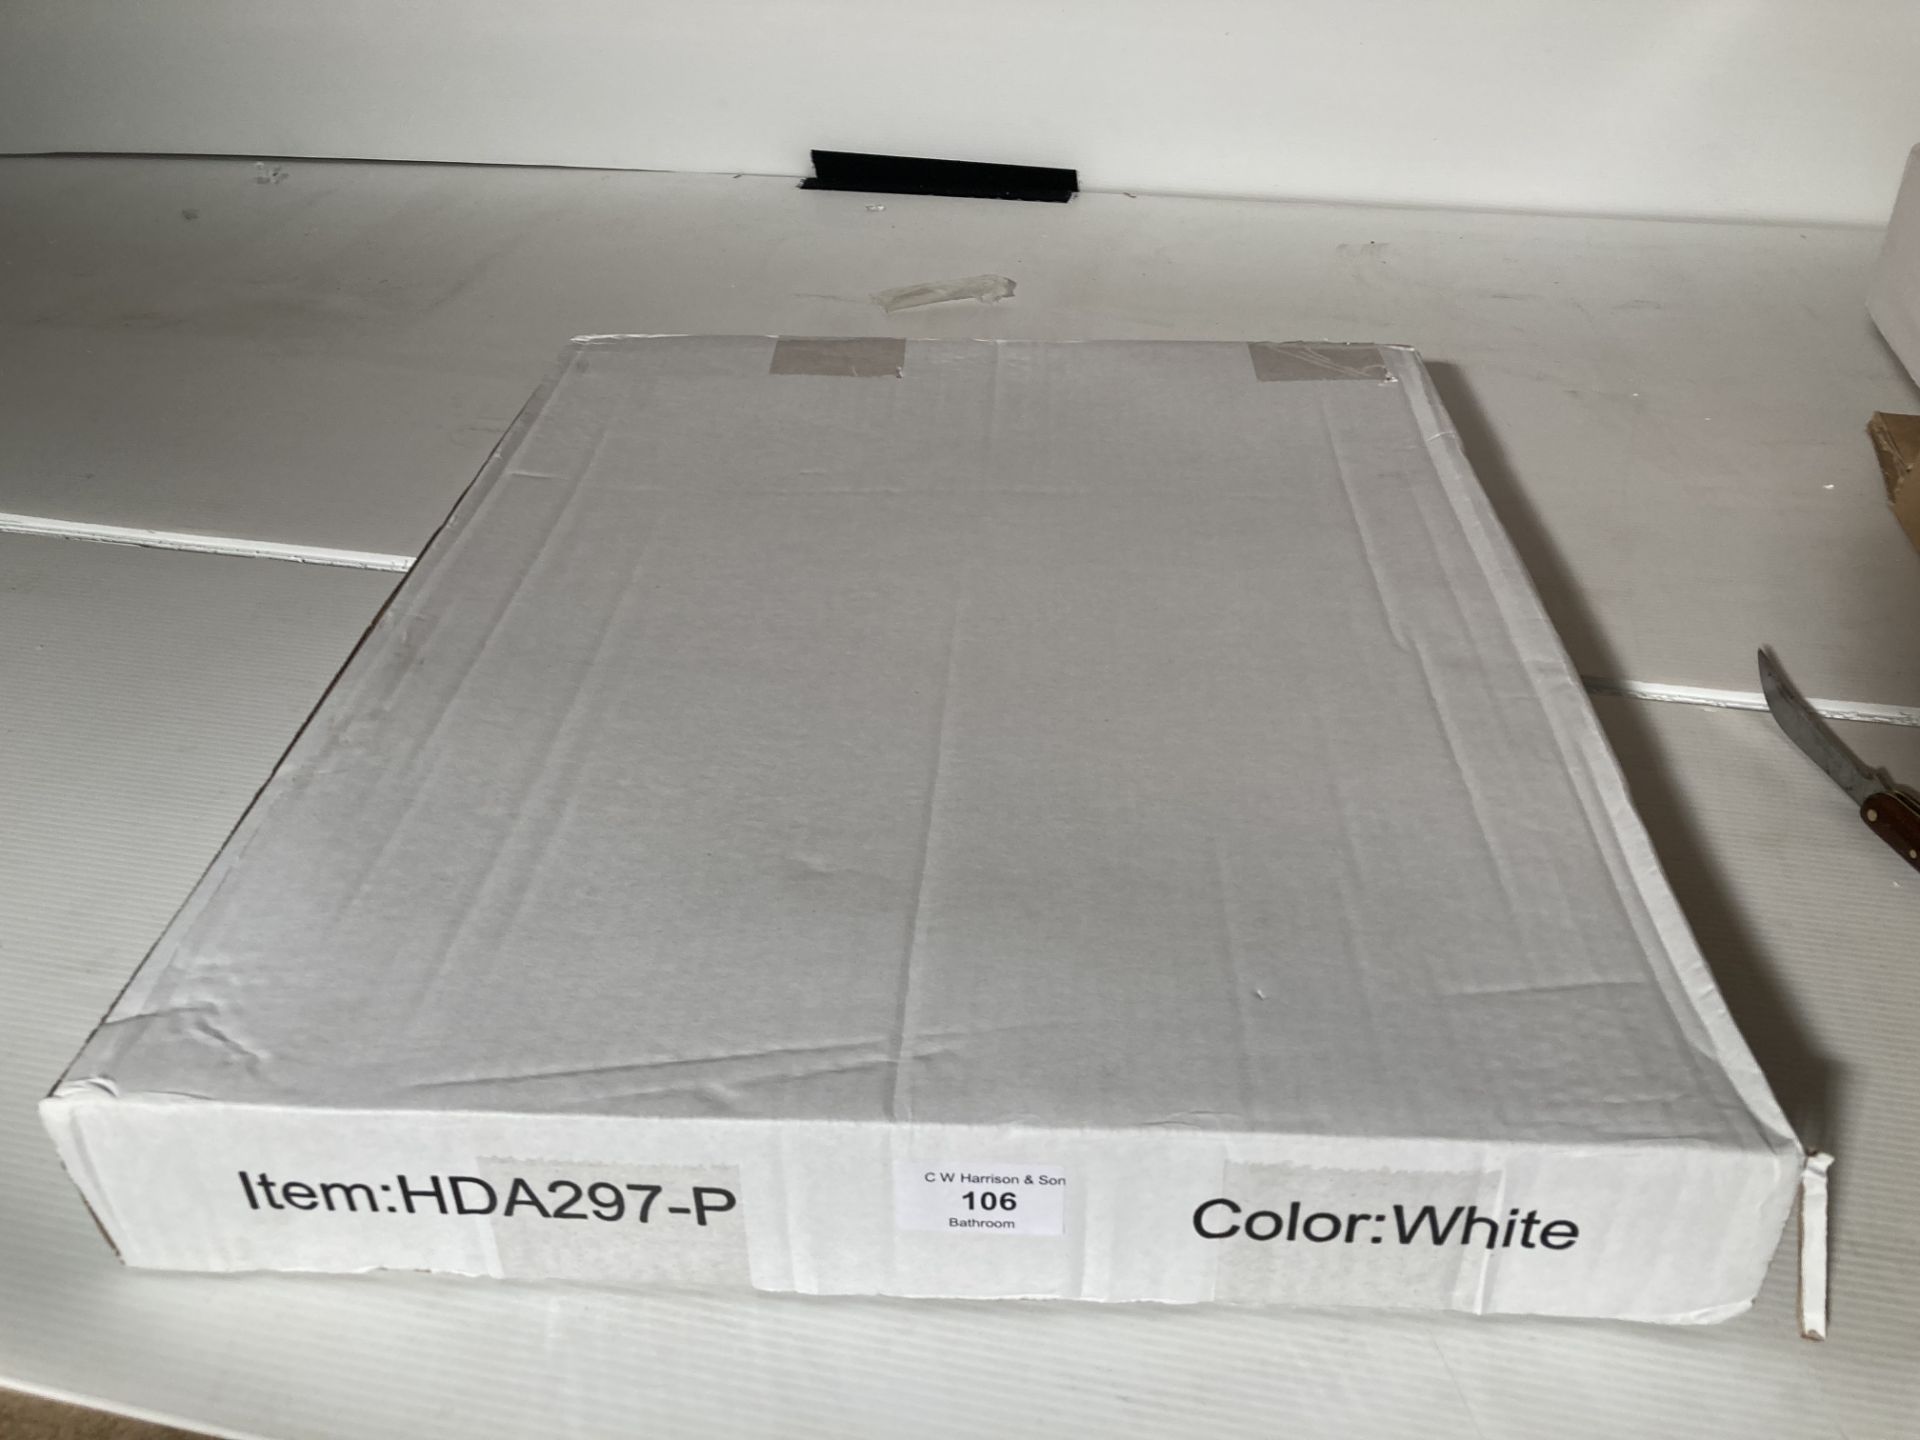 Imex Arco/Alma Duro slimline quick release toilet seat in white (saleroom location: QL06)